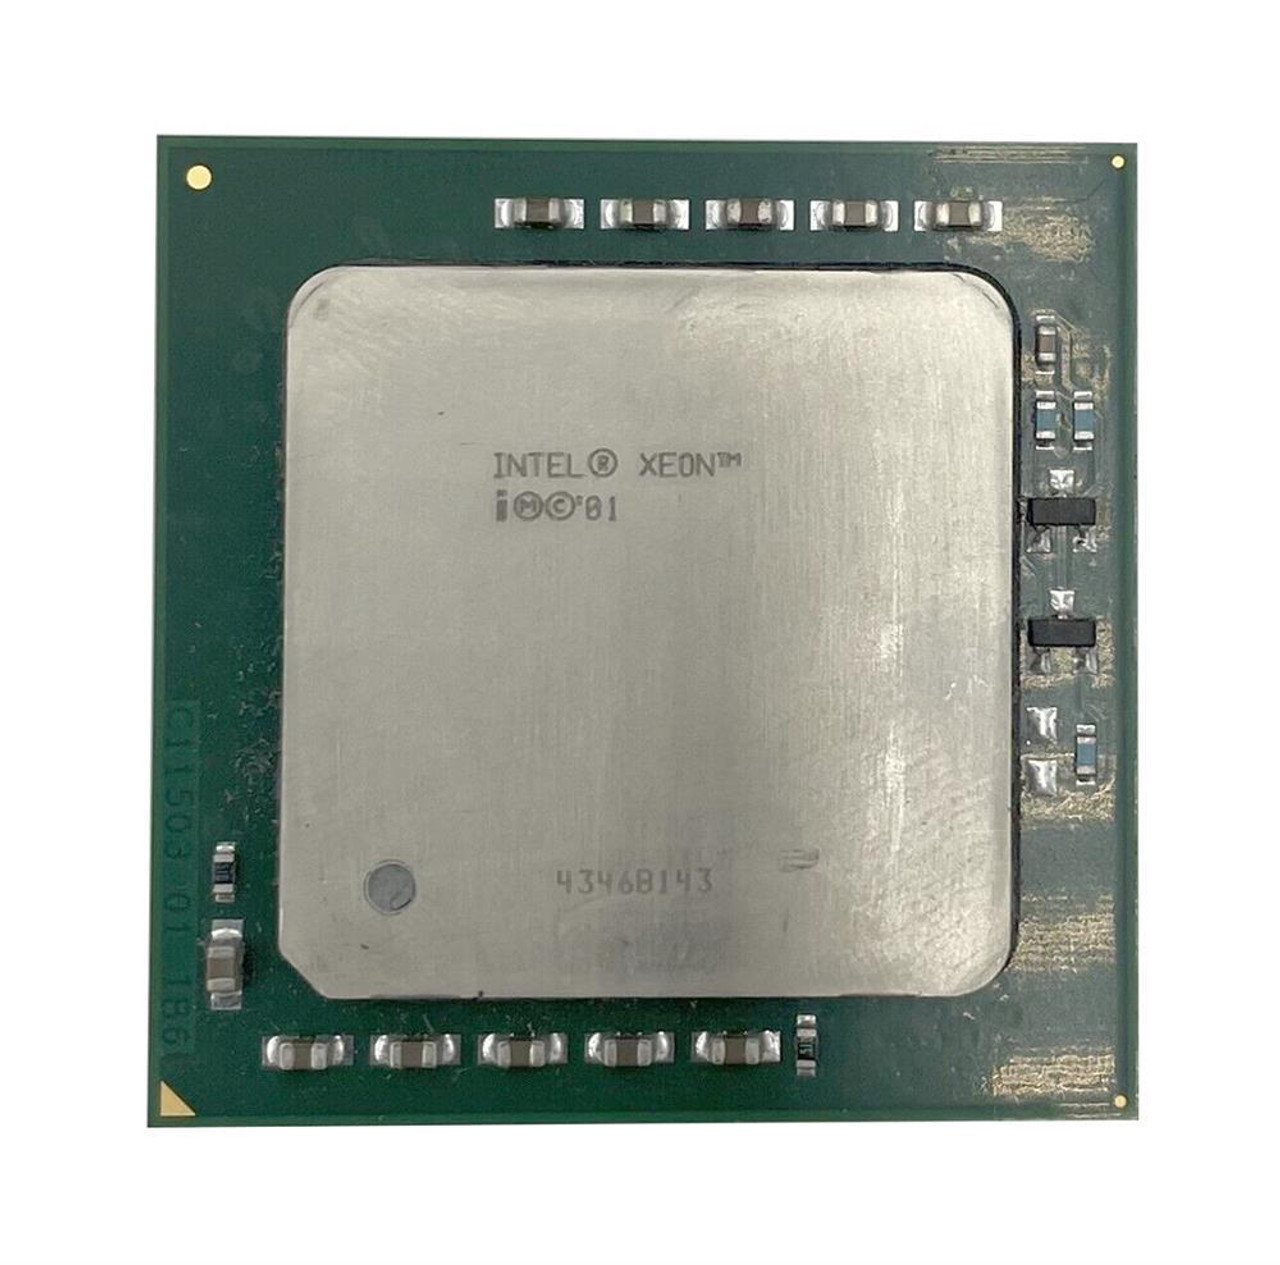 Fujitsu 2.40GHz 533MHz FSB 512KB L2 Cache Socket PPGA604 Intel Xeon Processor Upgrade